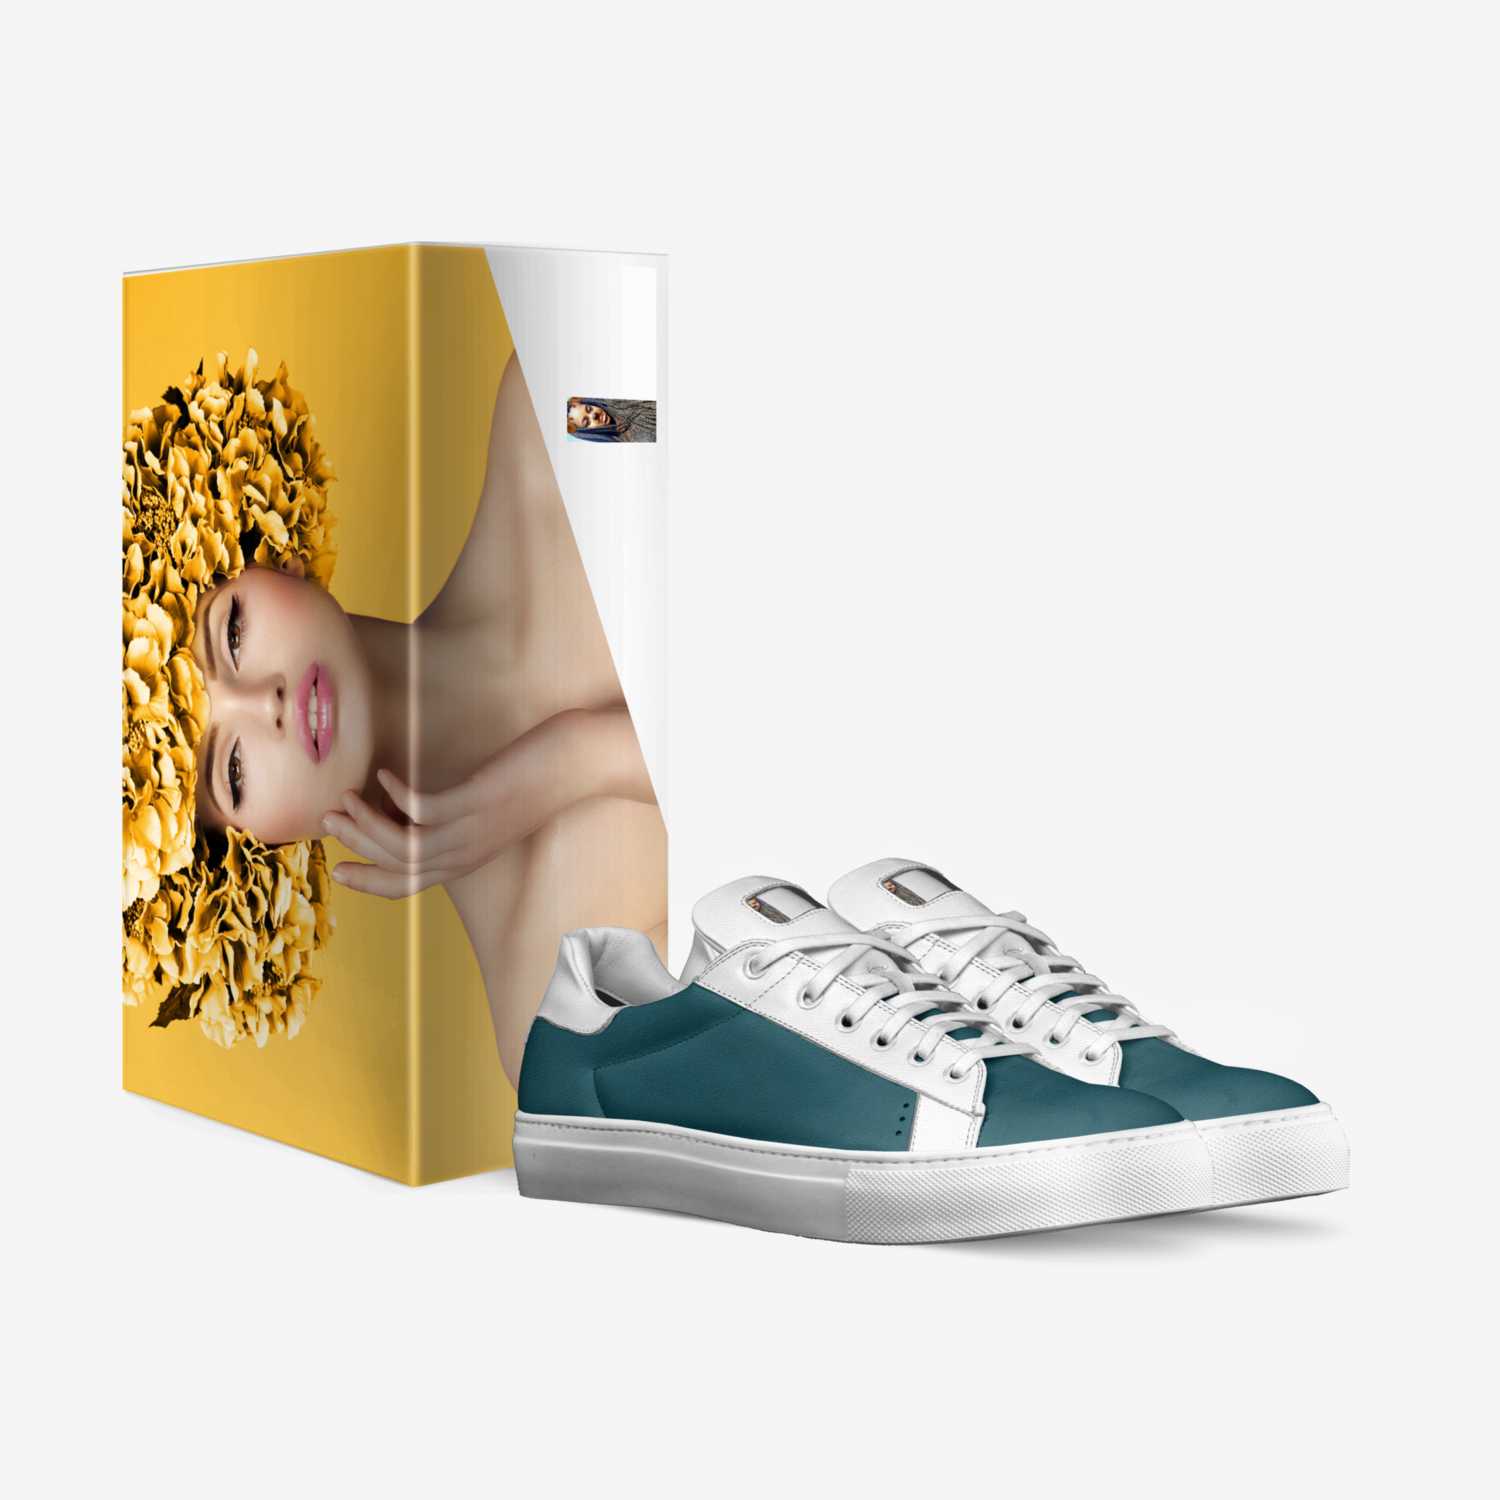 Maiya's custom made in Italy shoes by Jamaiya Daniels | Box view